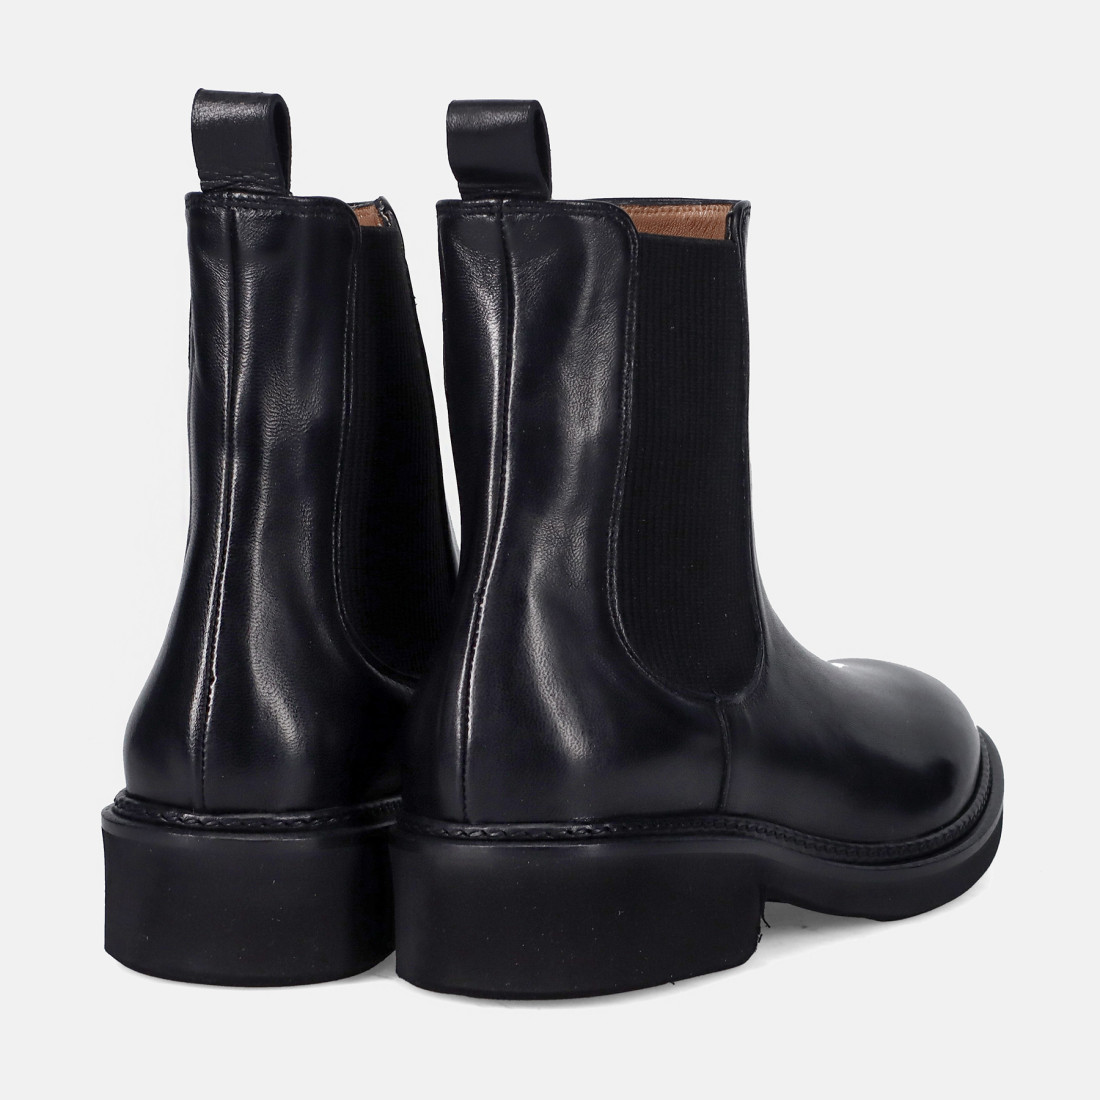 Calpierre DM80 black leather women's Chelsea boot